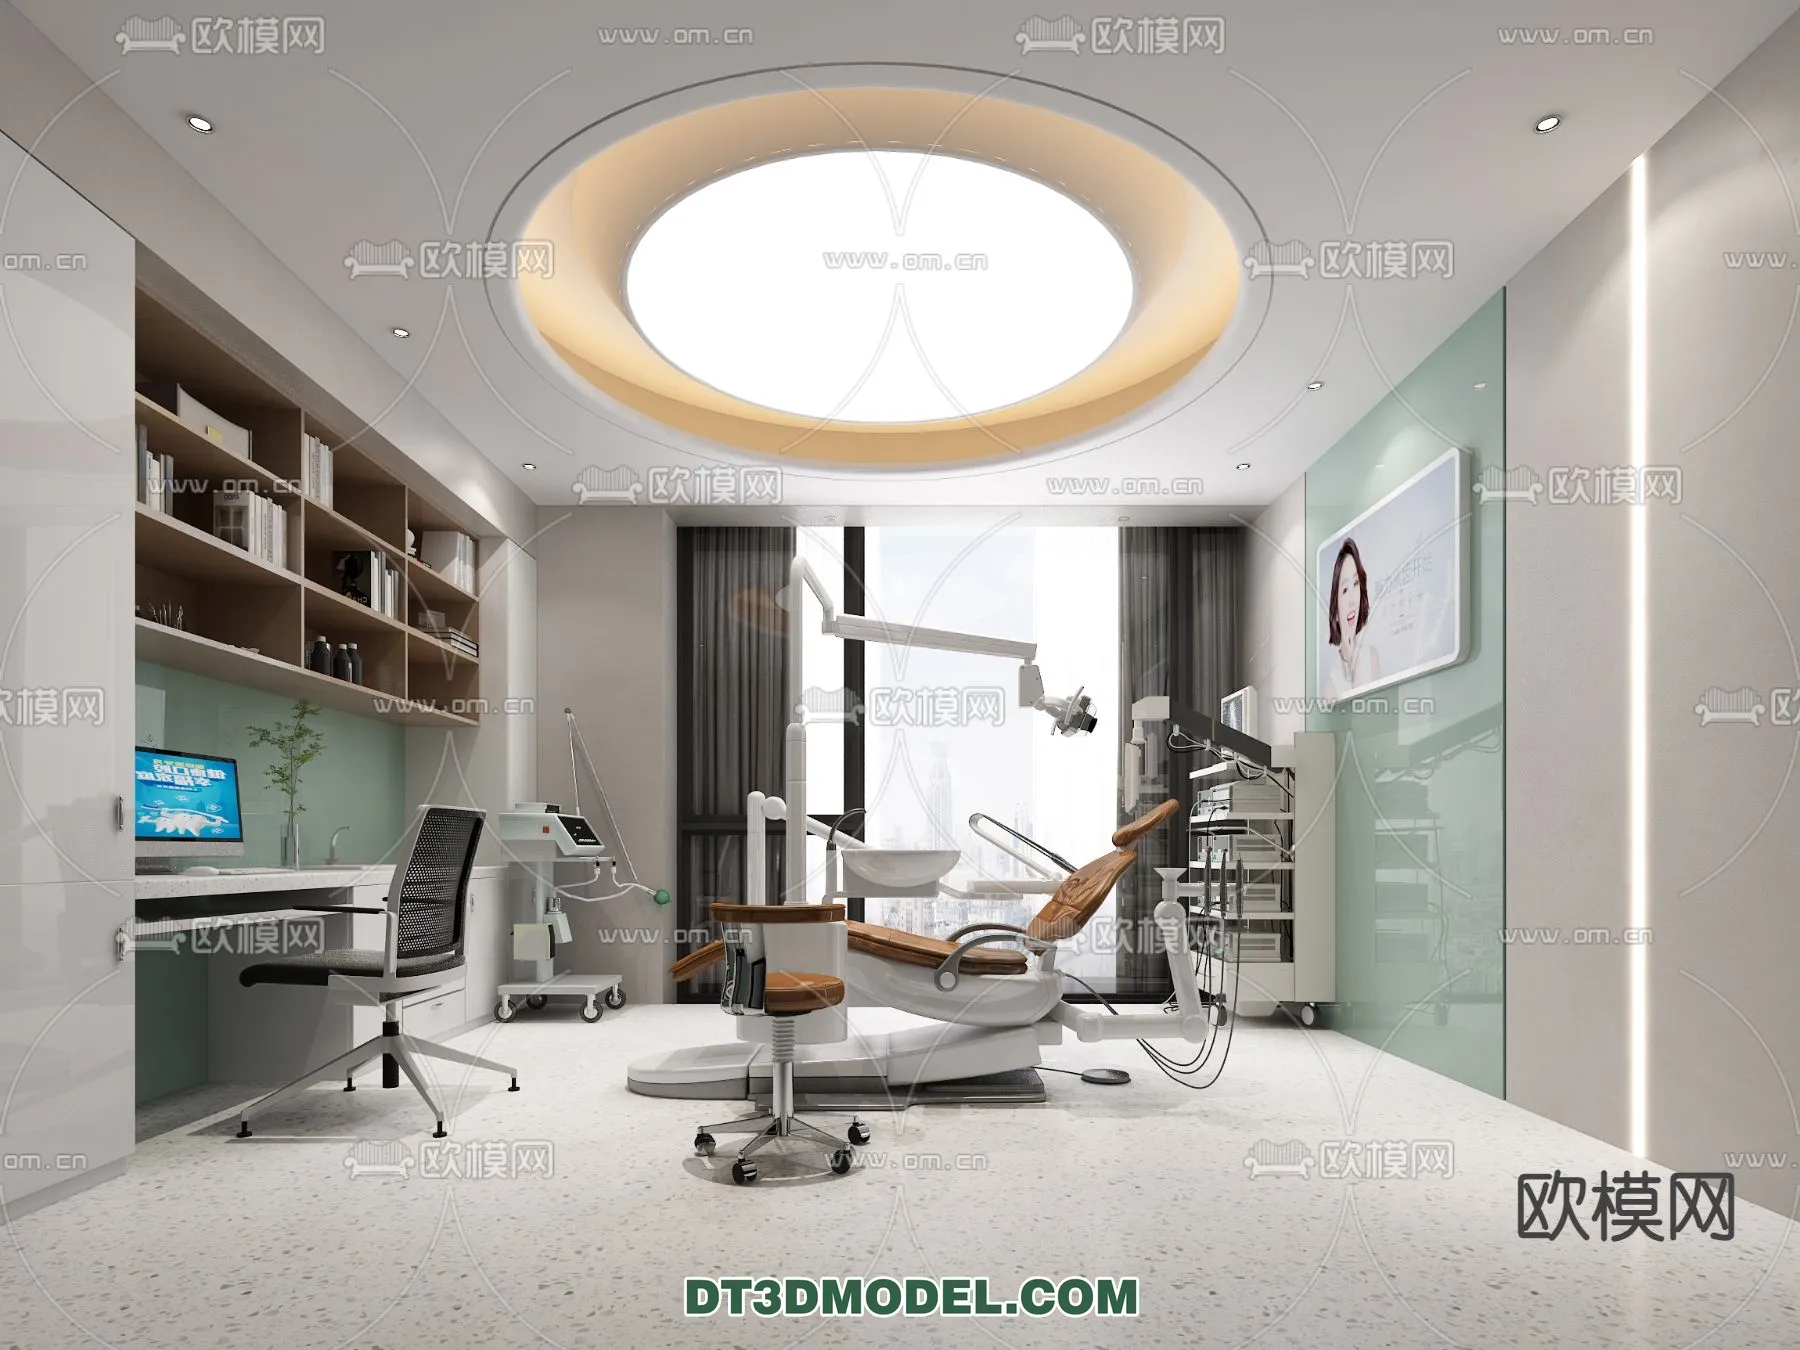 HOSPITAL 3D SCENES – MODERN – 0181